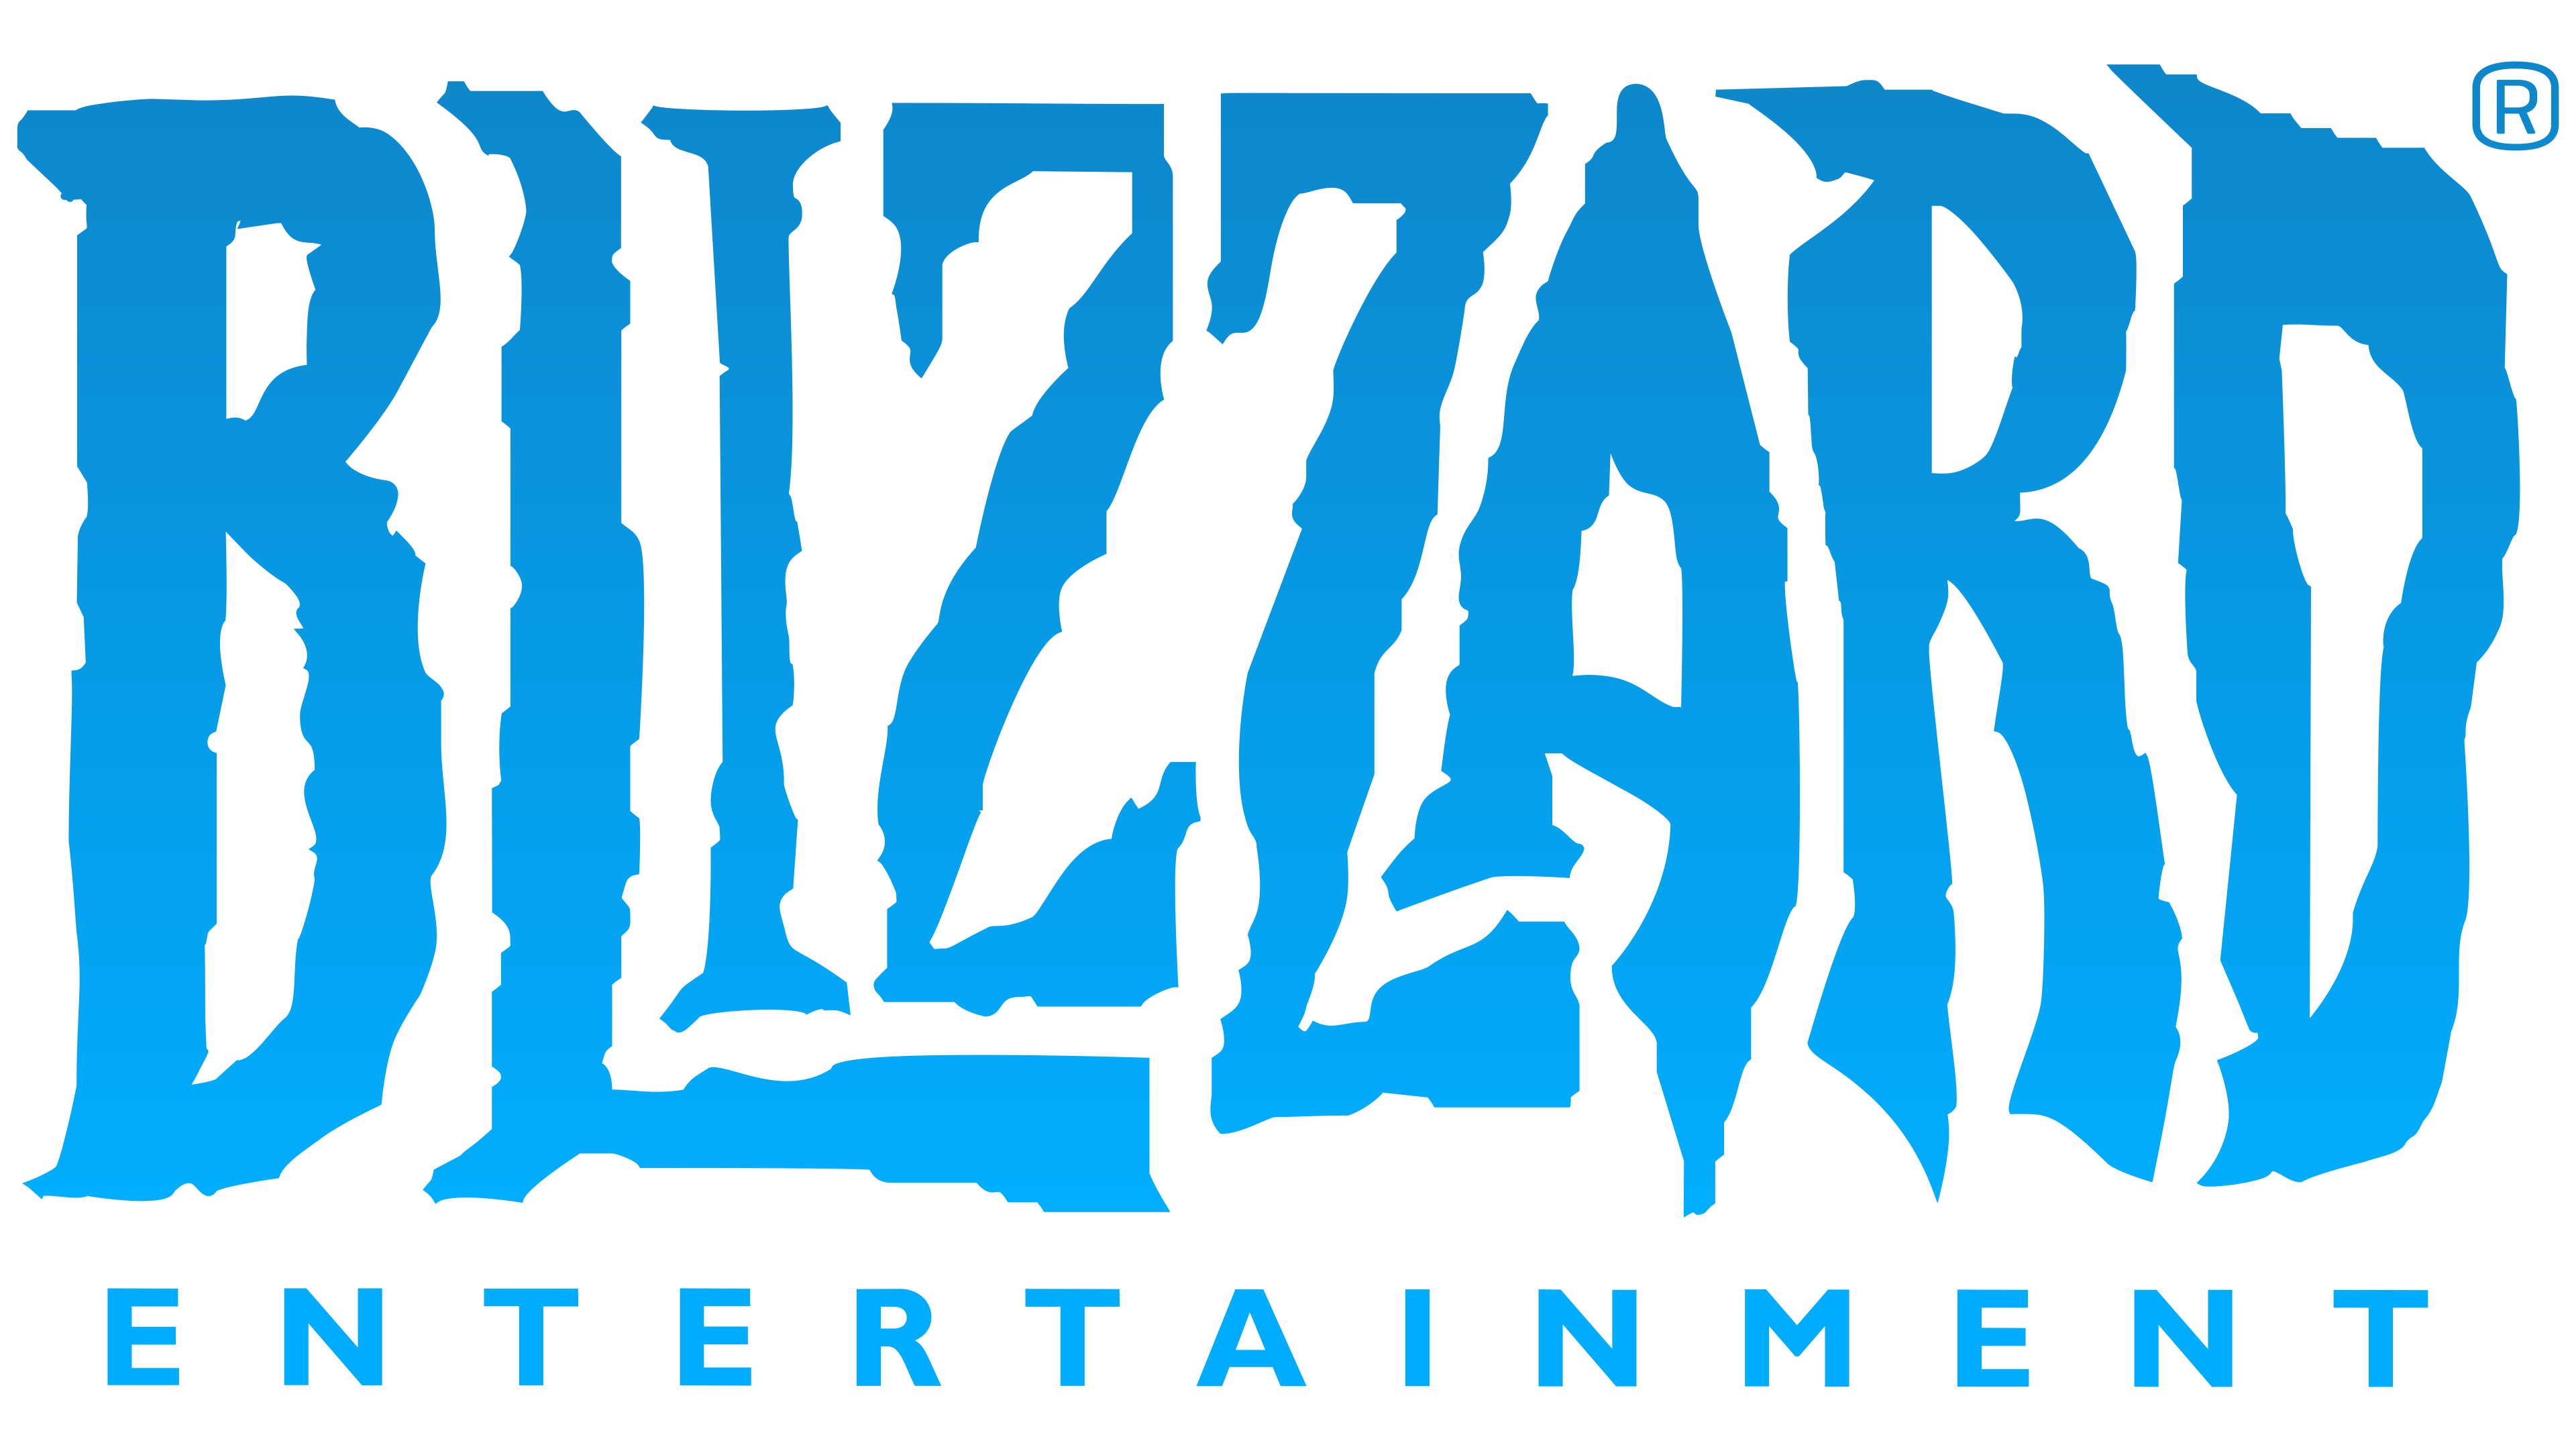 Blizzard-Logo